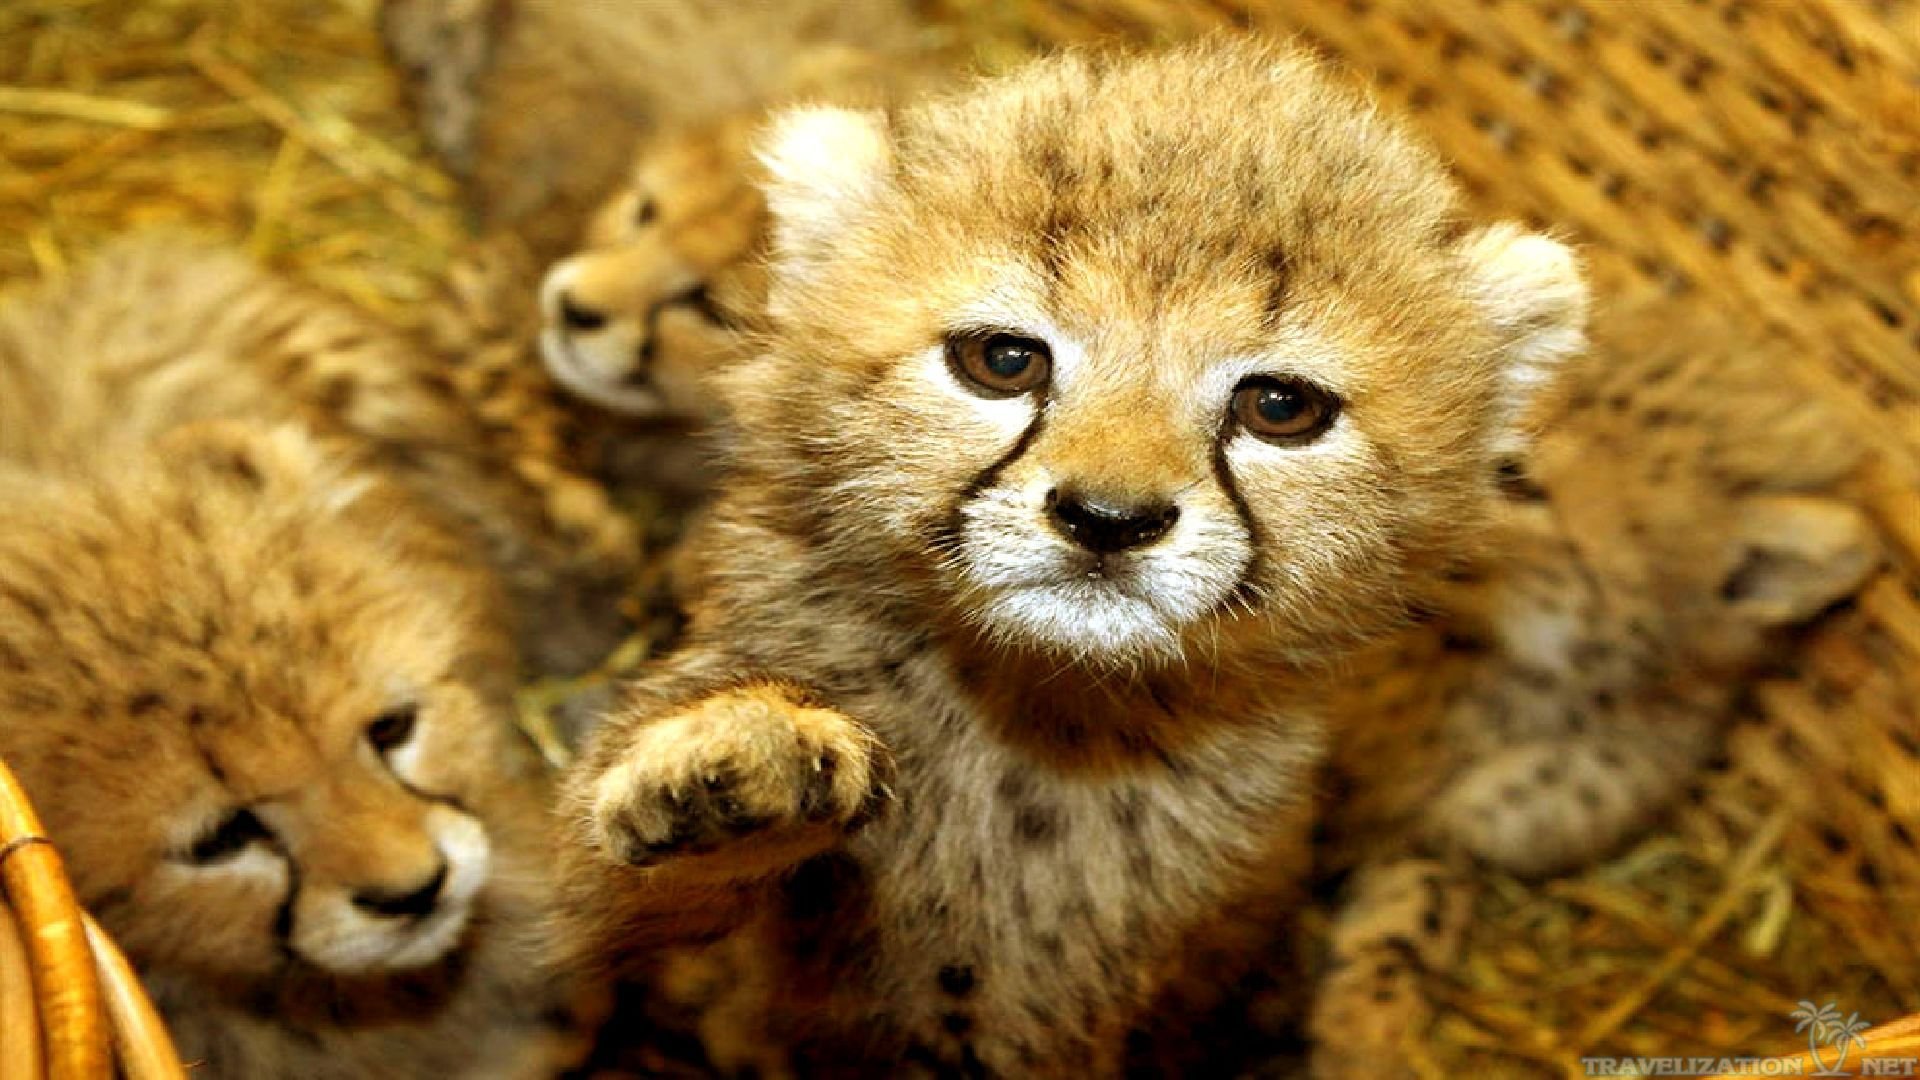 Cute Baby Animal Wallpapers Download Free - PixelsTalk.Net